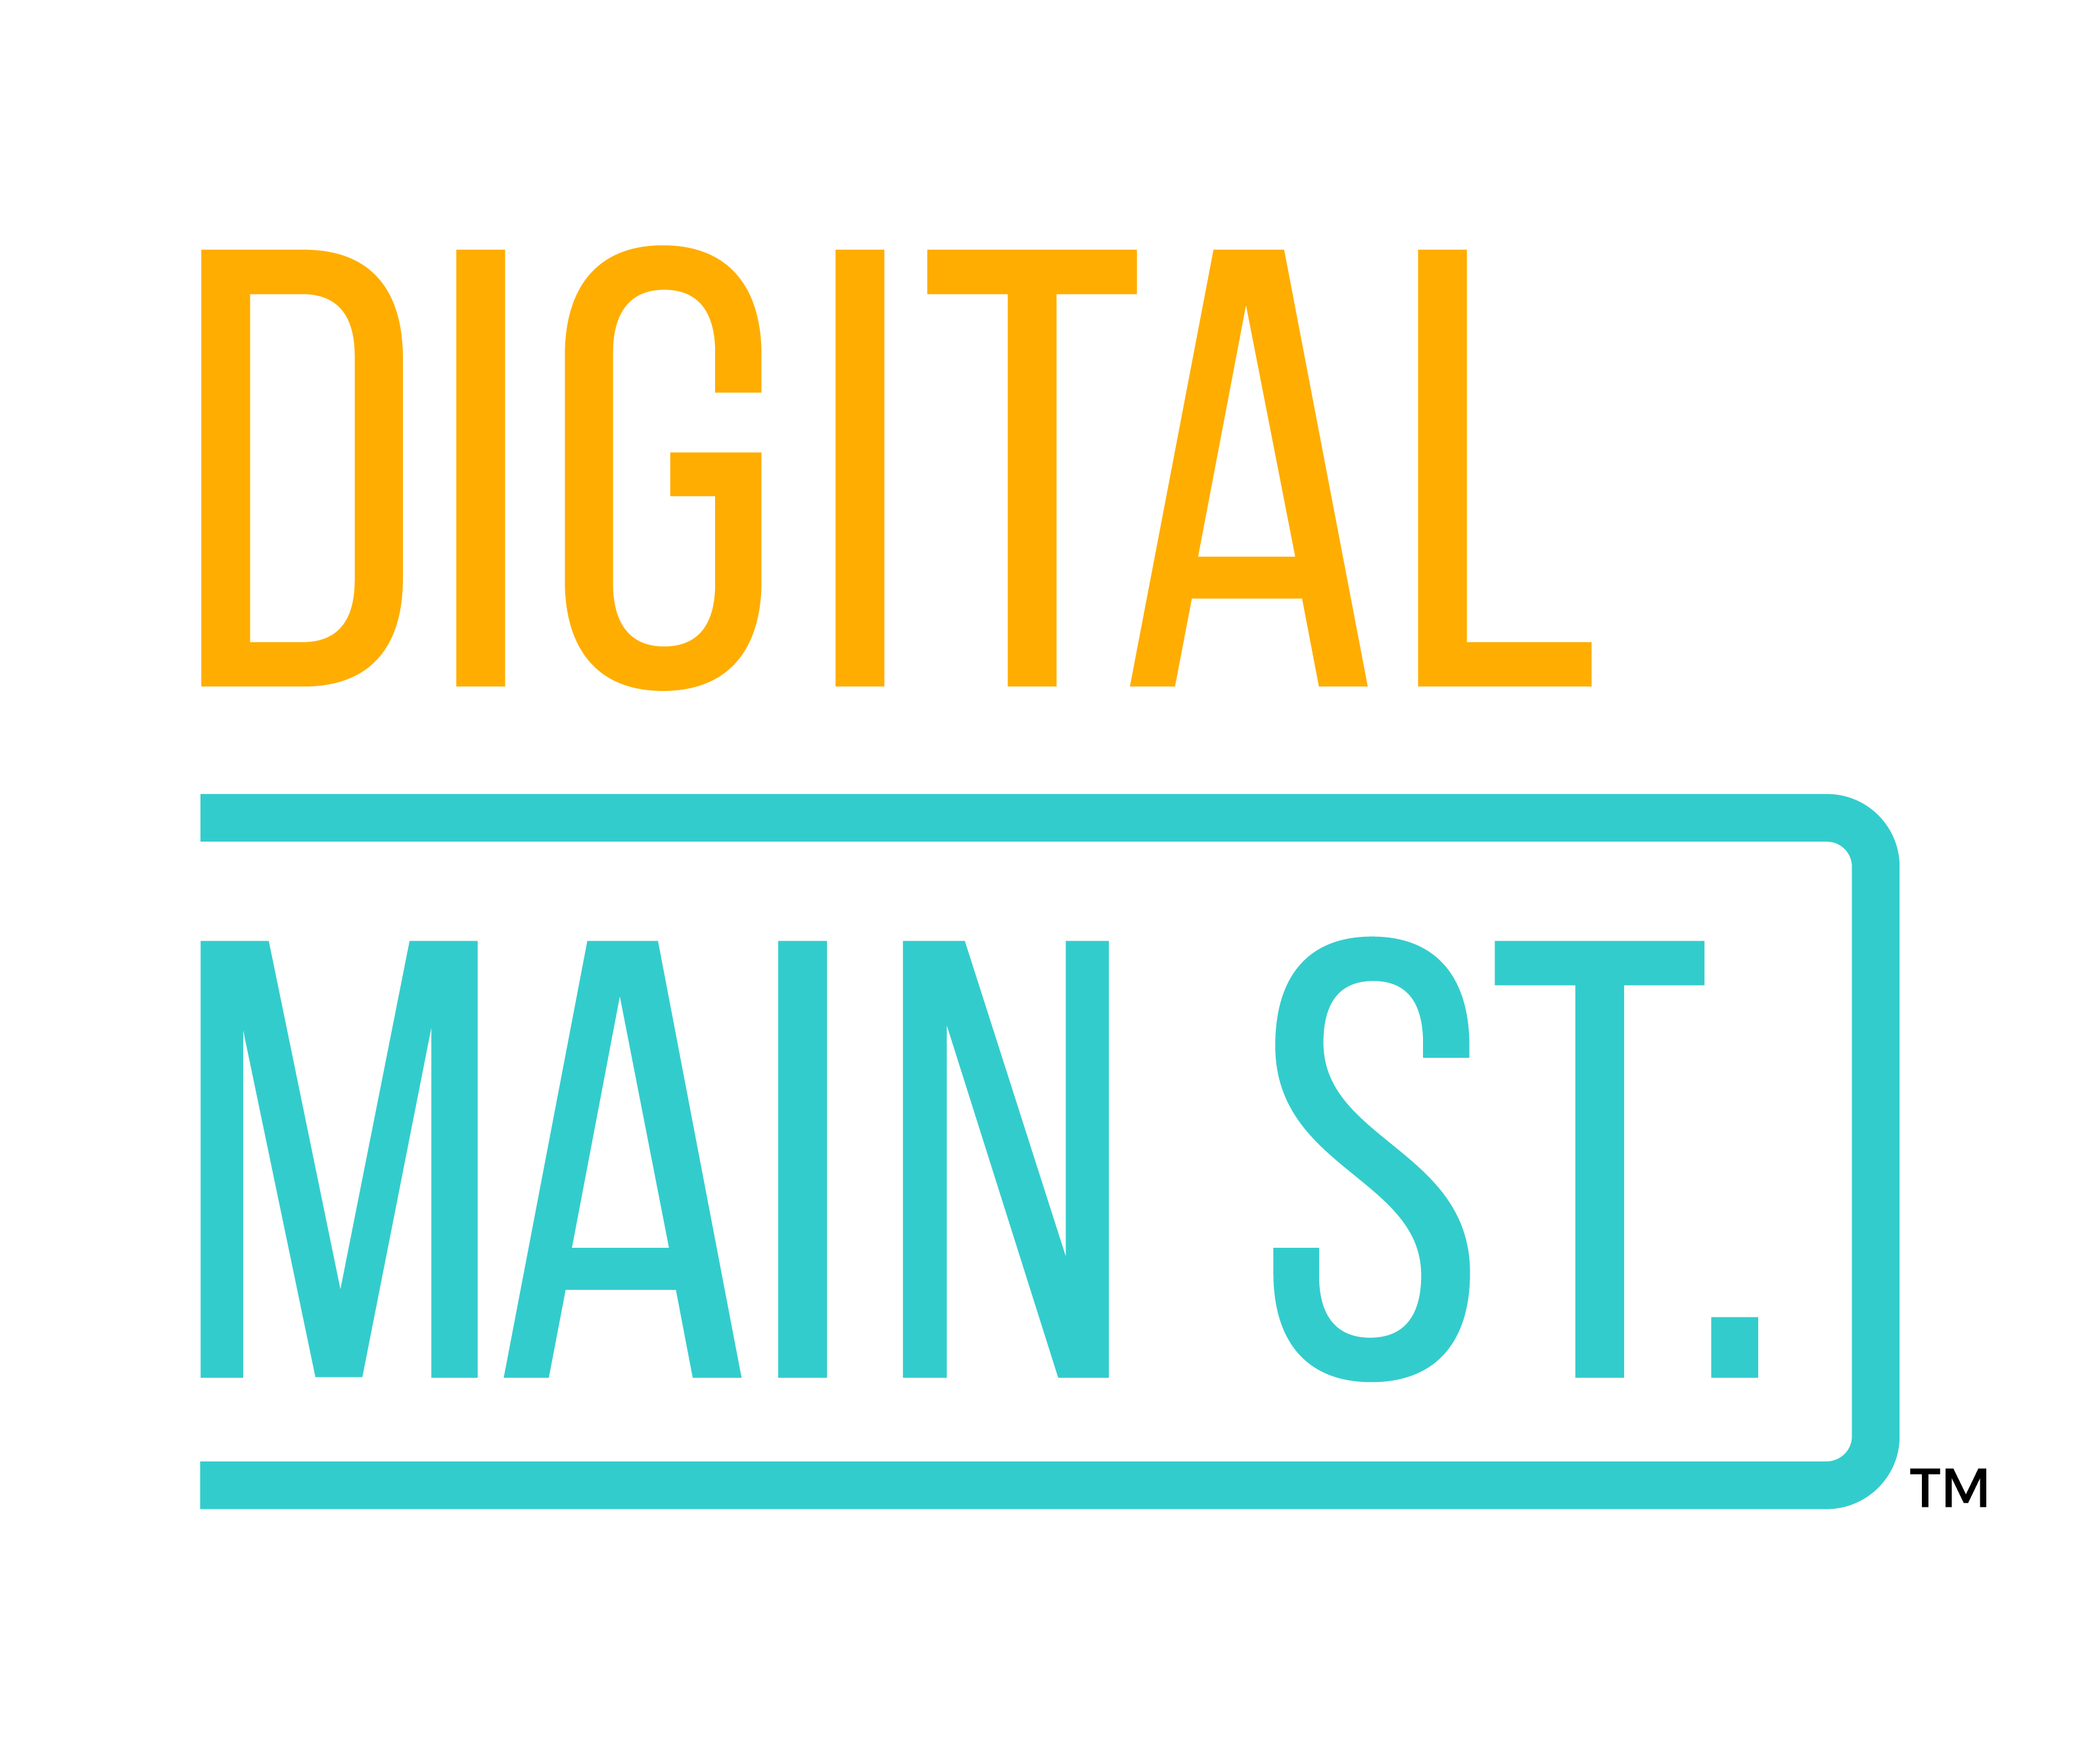 Digital Main Street